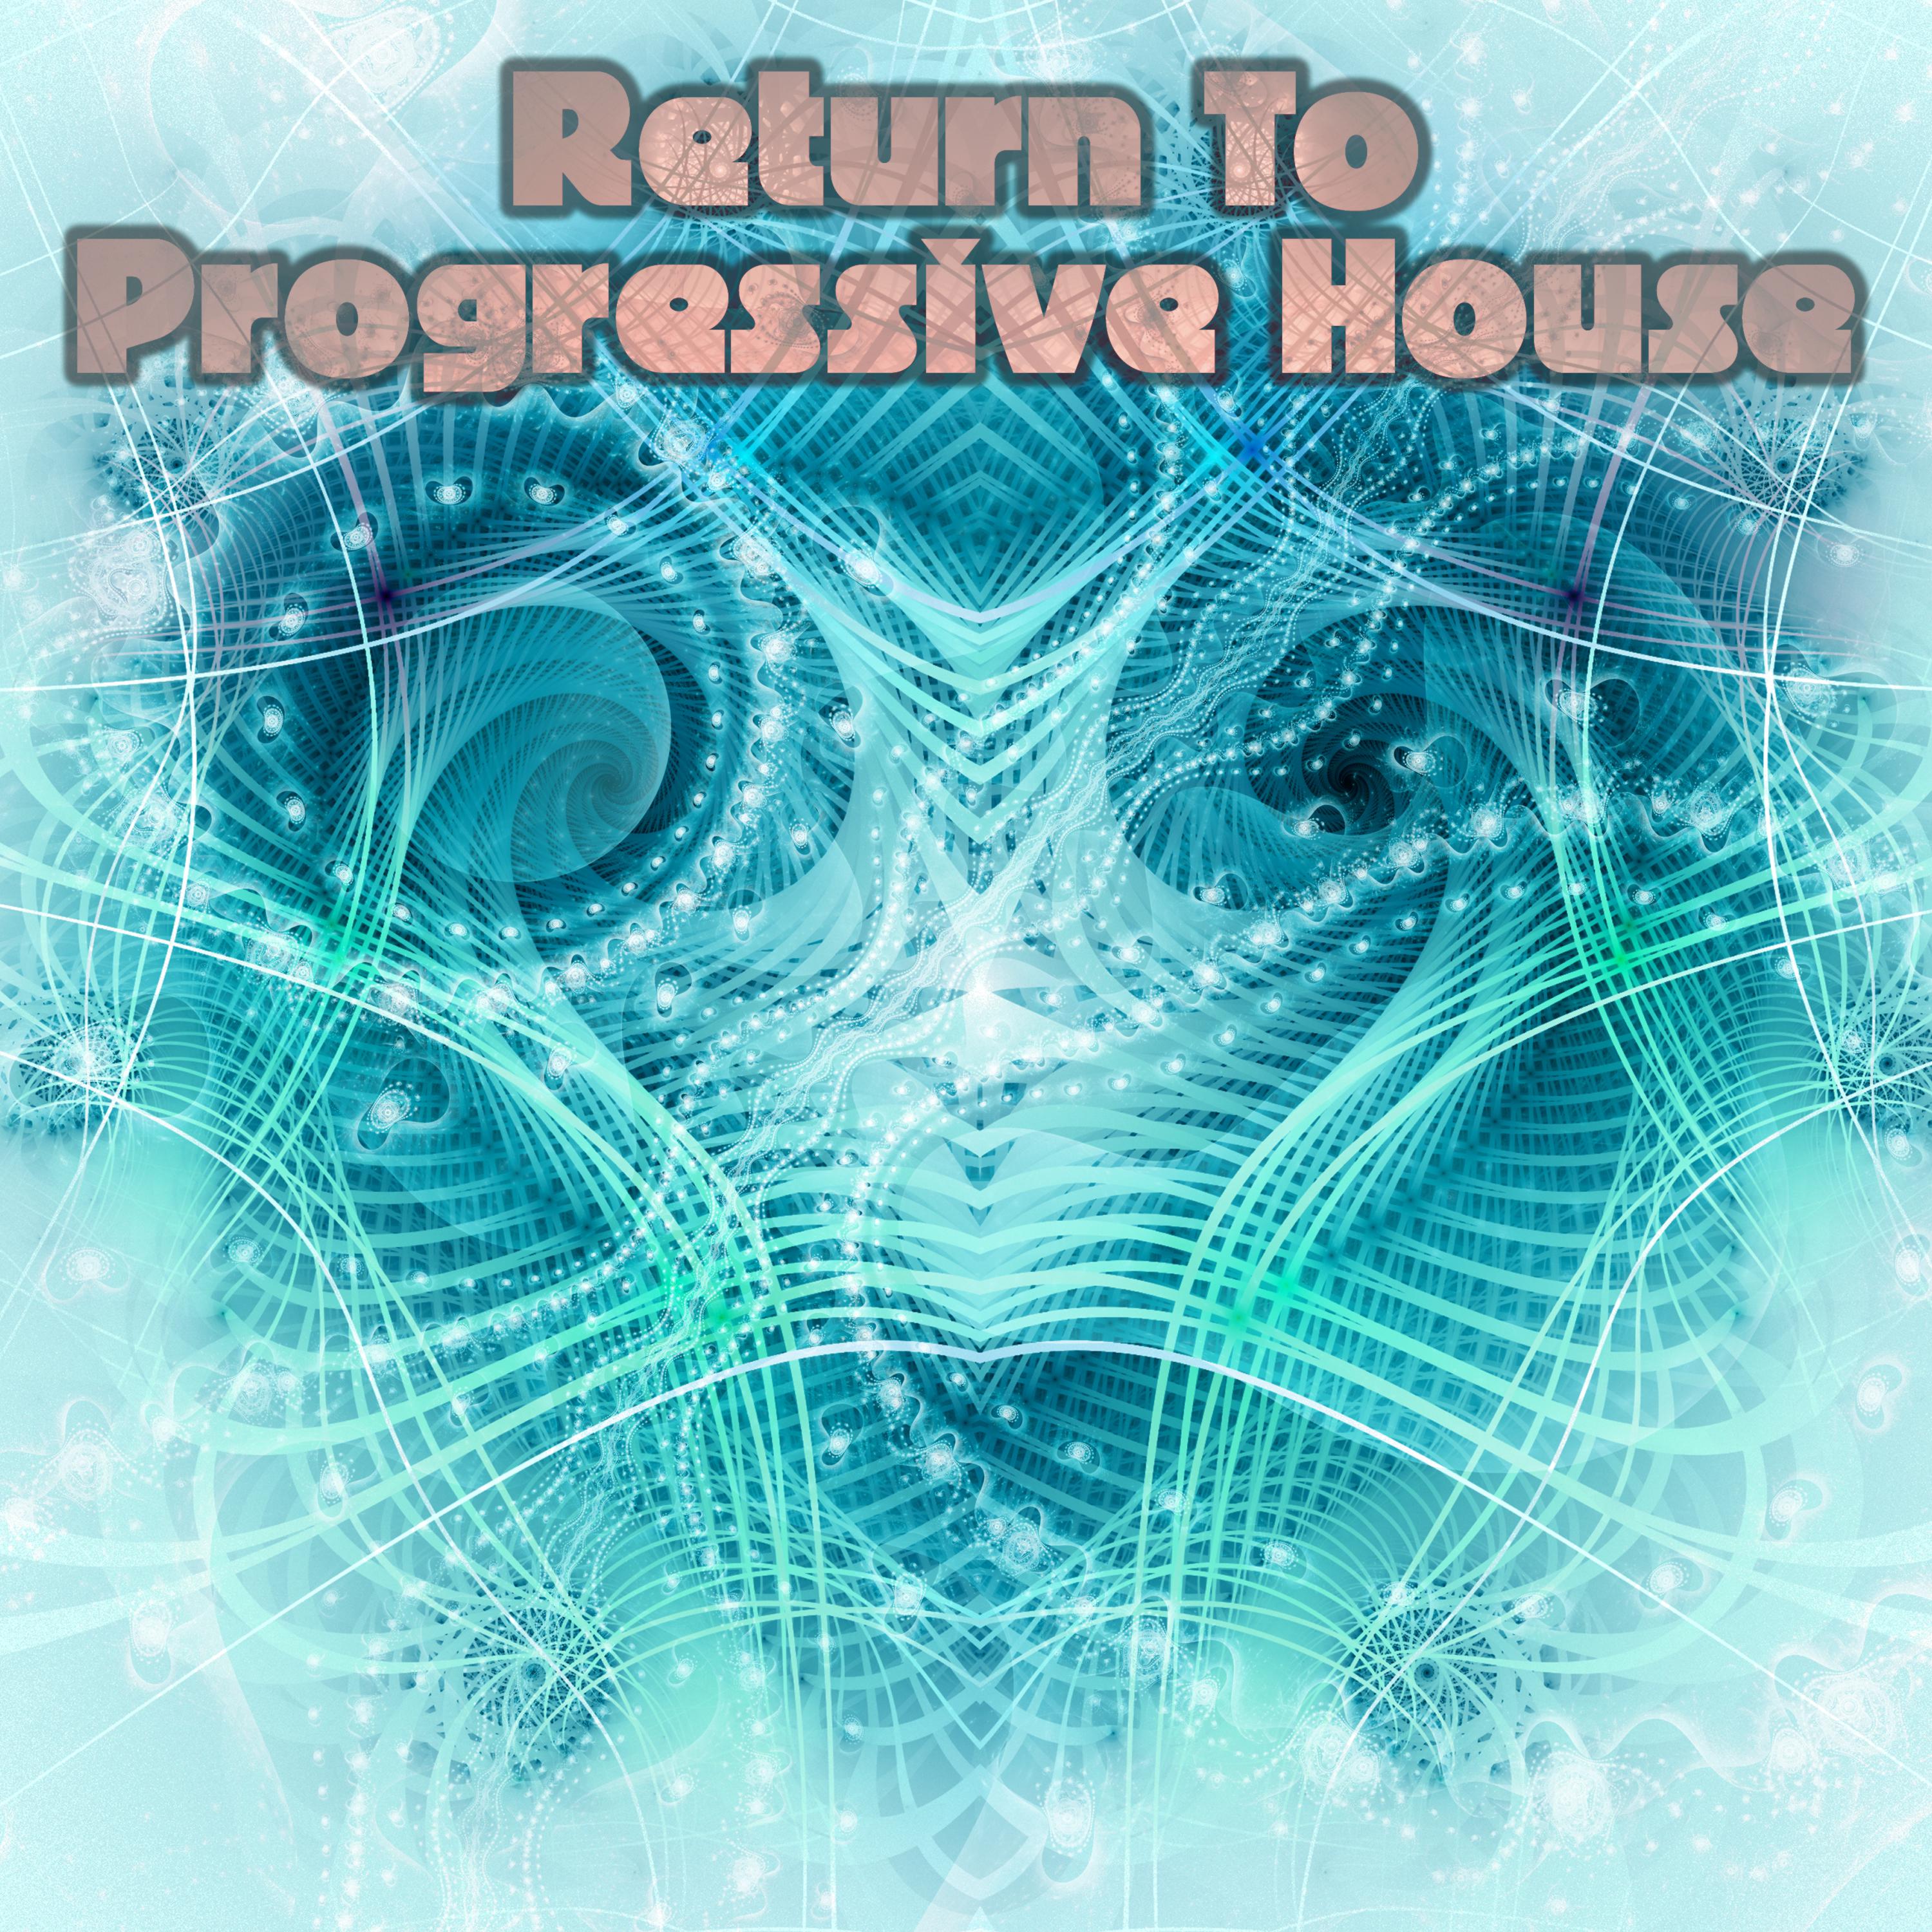 Return to Progressive House